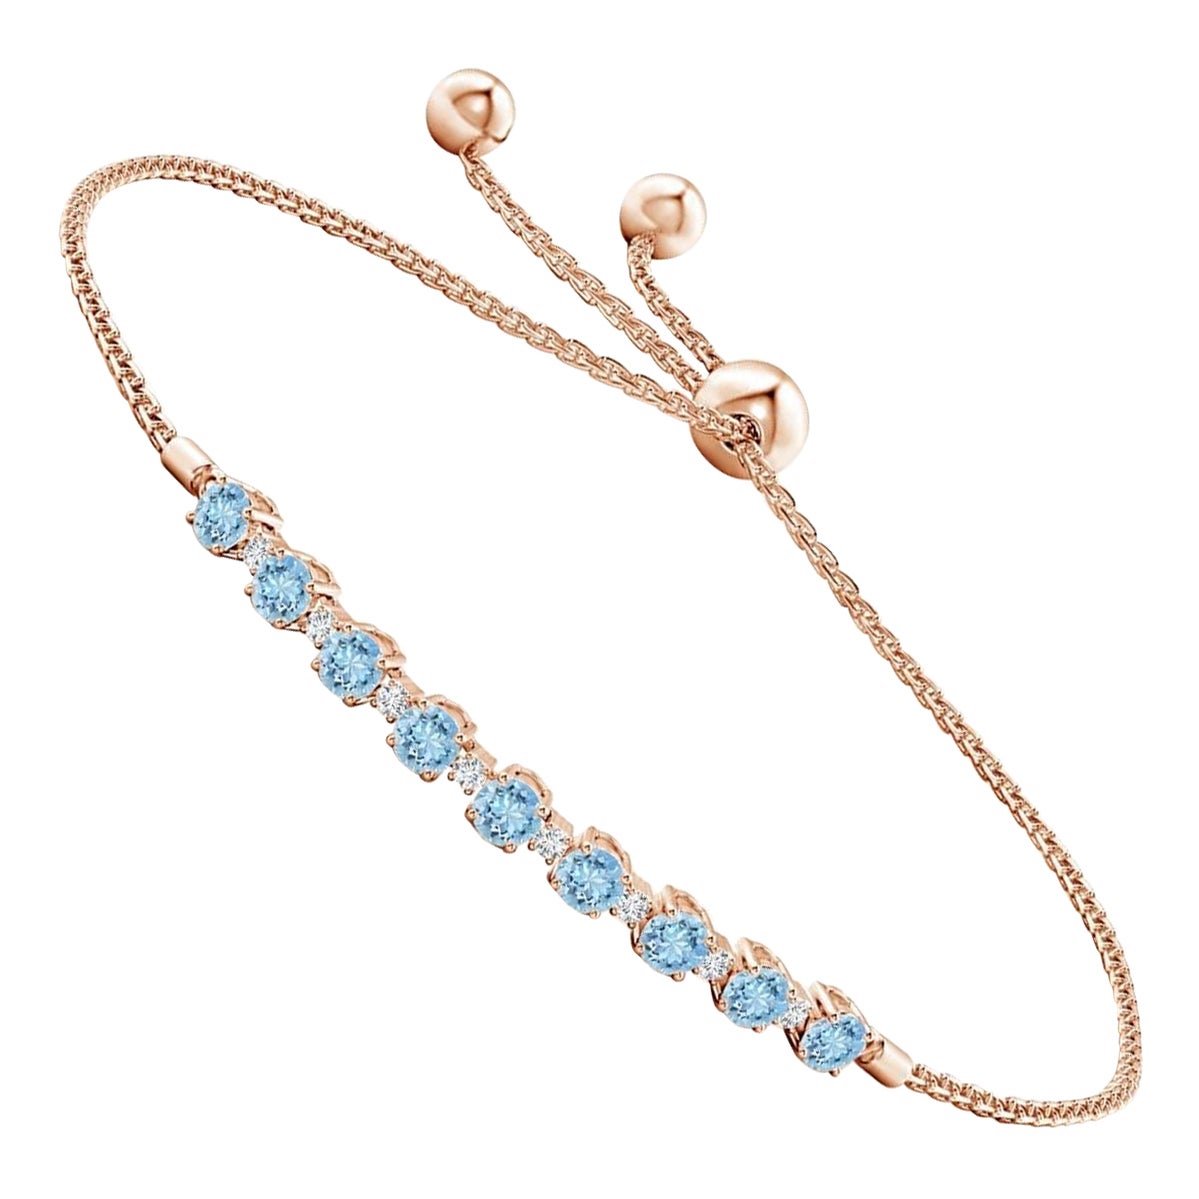 Natural 0.90ct Aquamarine and Diamond Tennis Bracelet in 14K Rose Gold